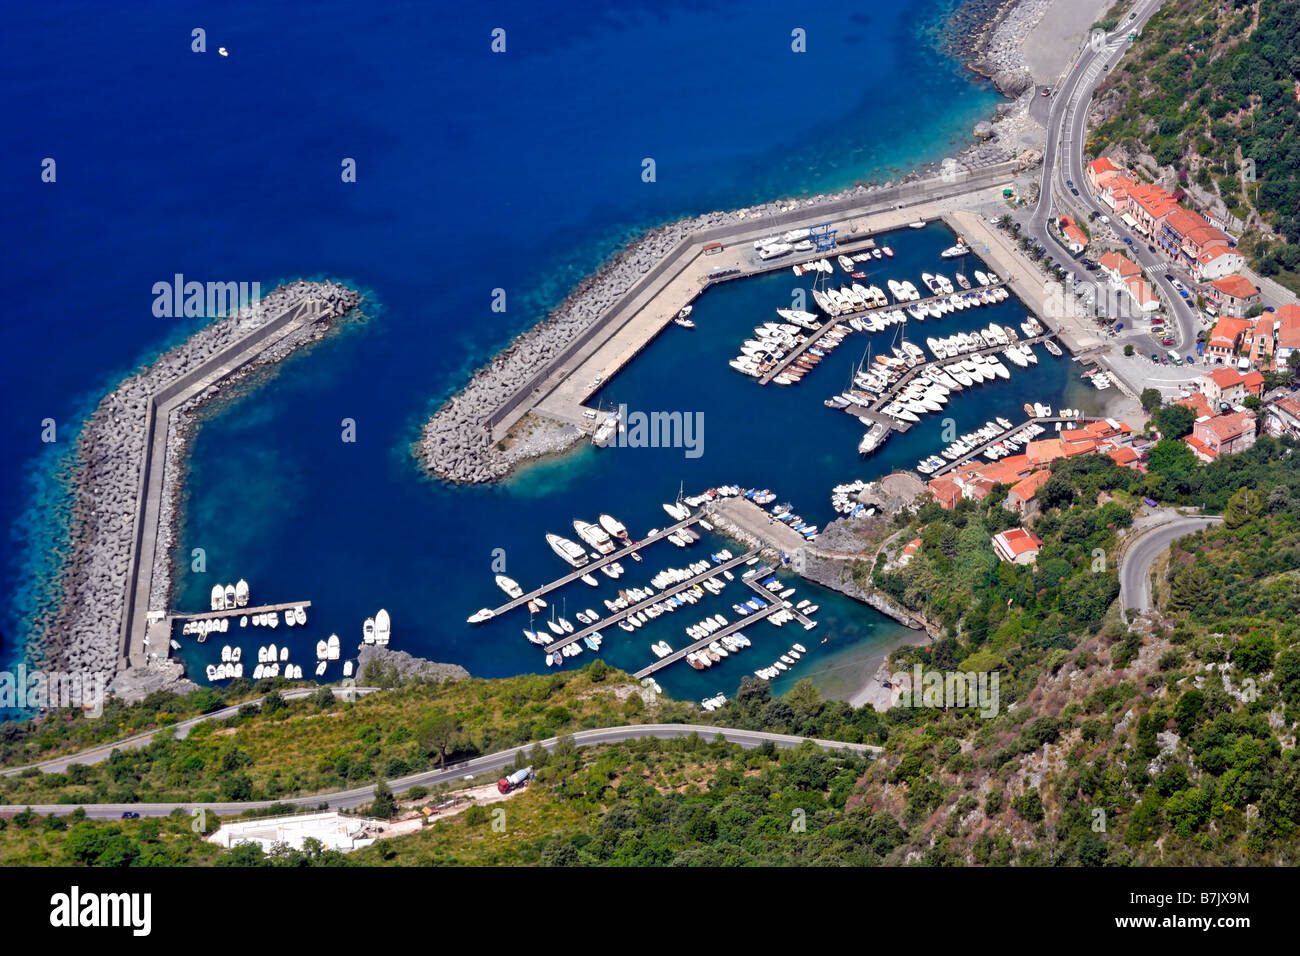 Maratea, on western coast southern Italy, overlooking Policastro Gulf in the Tyrrhenian Sea, founded 8th-C BC by the Greeks: Porto di Maratea Stock Photo